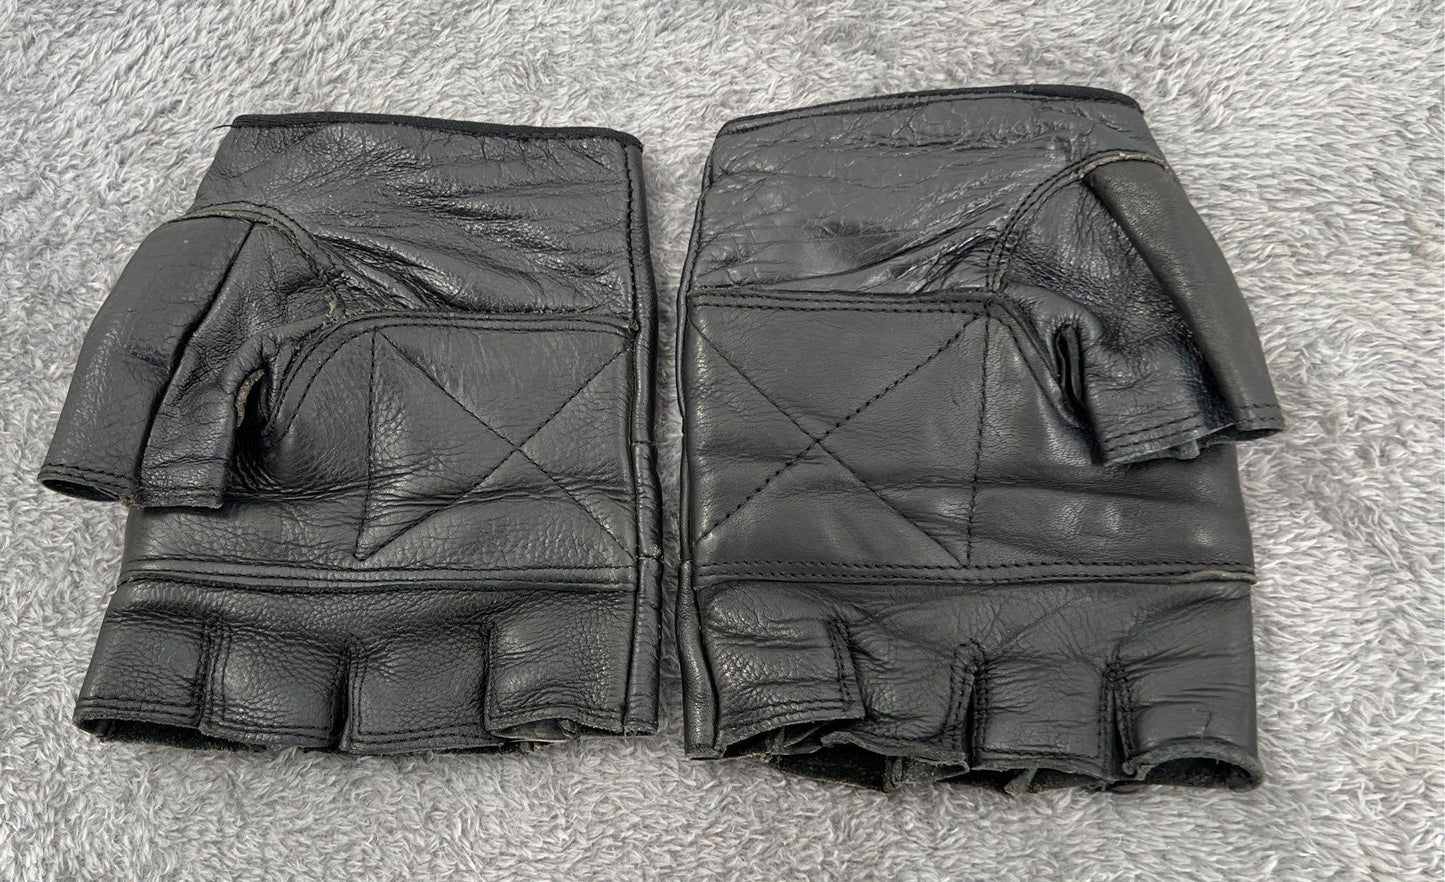 Harley Davidson Neck Cover & Men's Size L Fingerless Leather Motorcycle Gloves